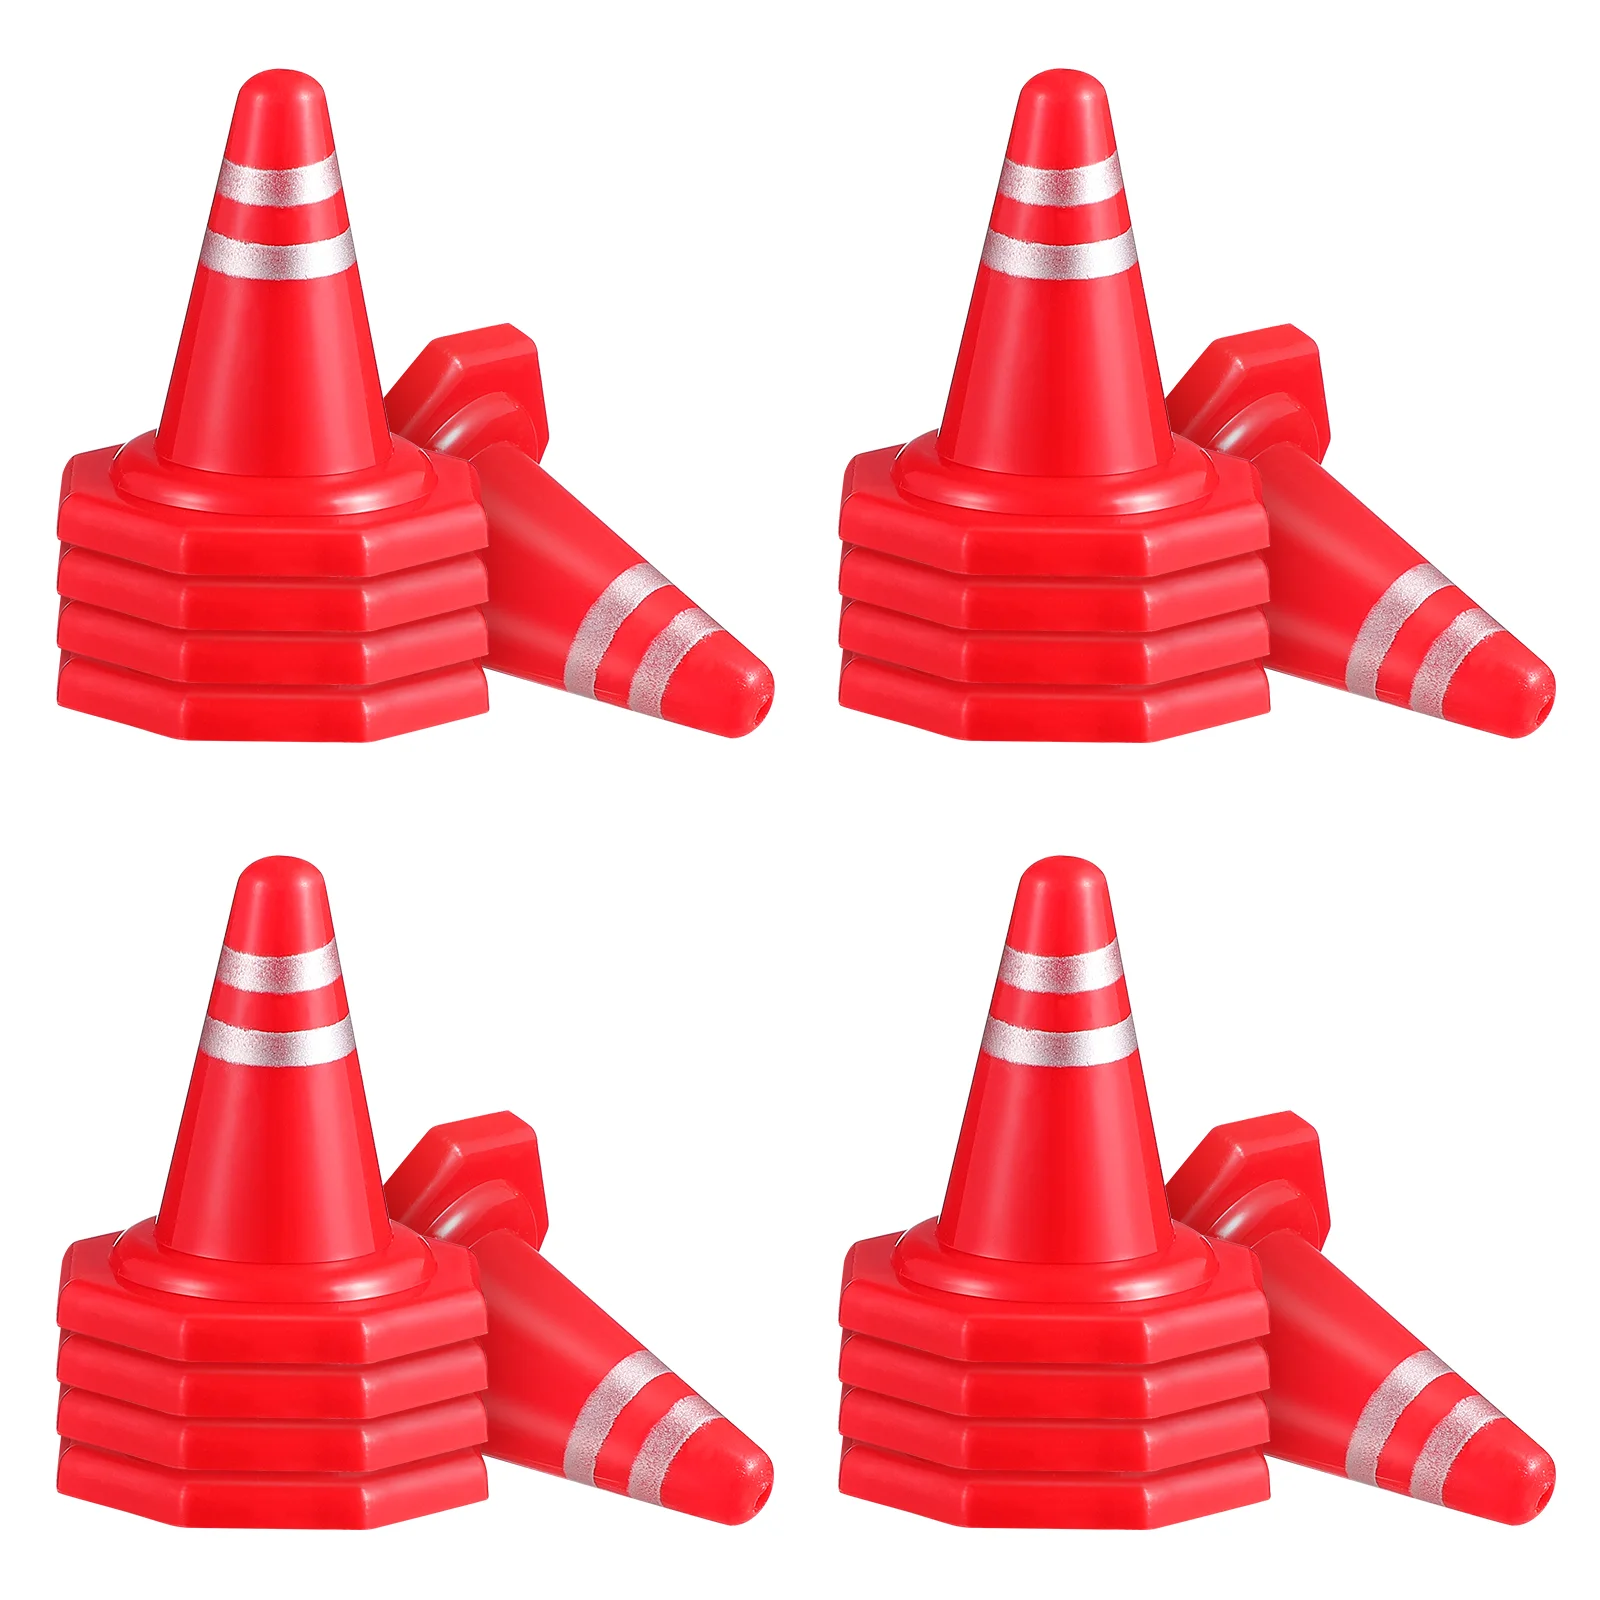 Sandbox Barricades Mini Roadblock Emblems Signs for Kids Children’s Childrens Toyss Transportation Puzzle Simulated Traffic